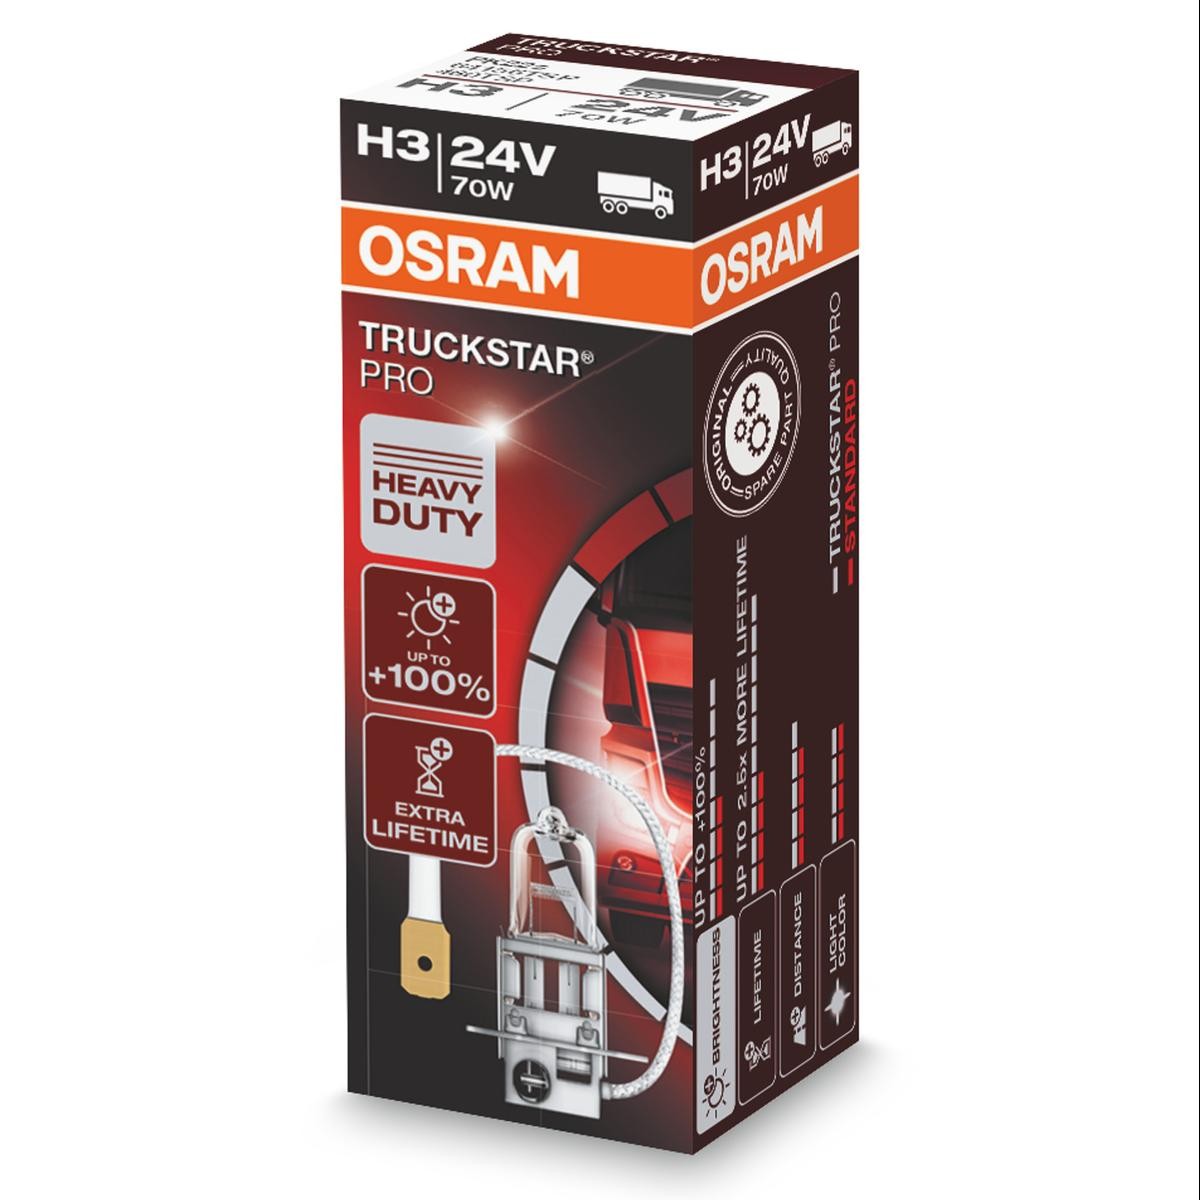 OSRAM TRUCKSTAR PRO 64156TSP Bulb, spotlight H3 24V 70W PK22s, 3200K, Halogen